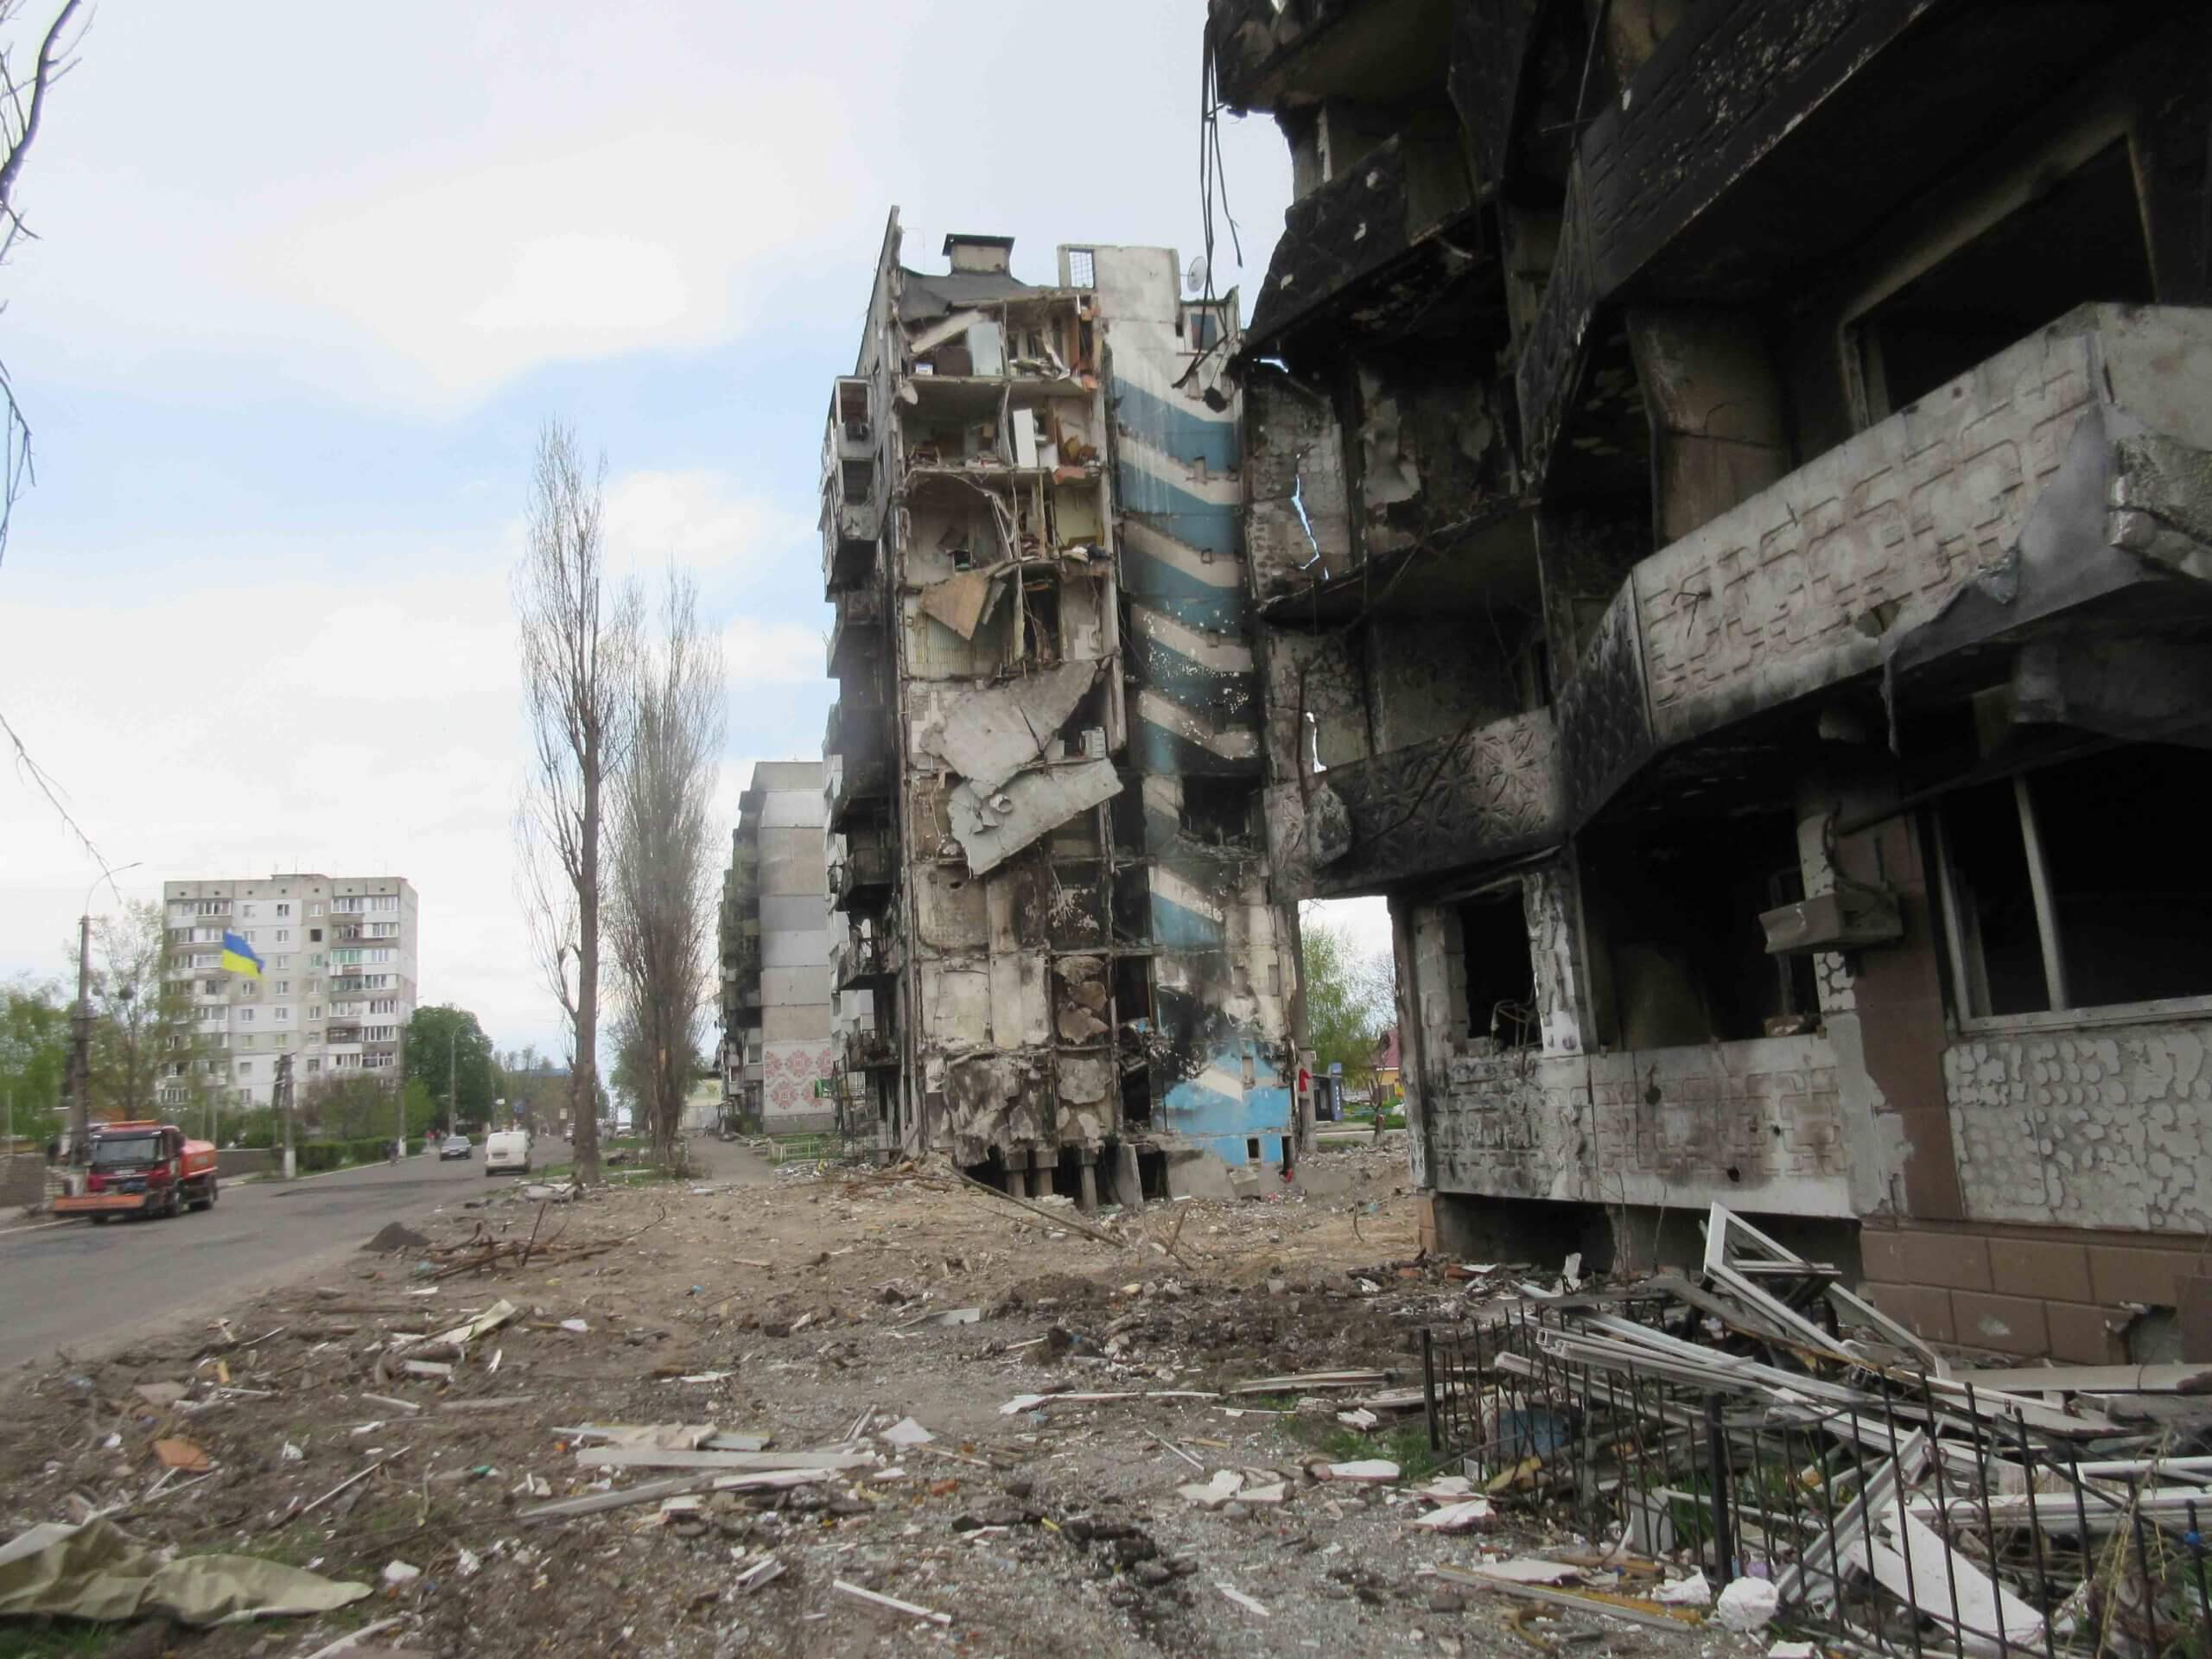 War in Ukraine Project Update, Christian Aid Ministries